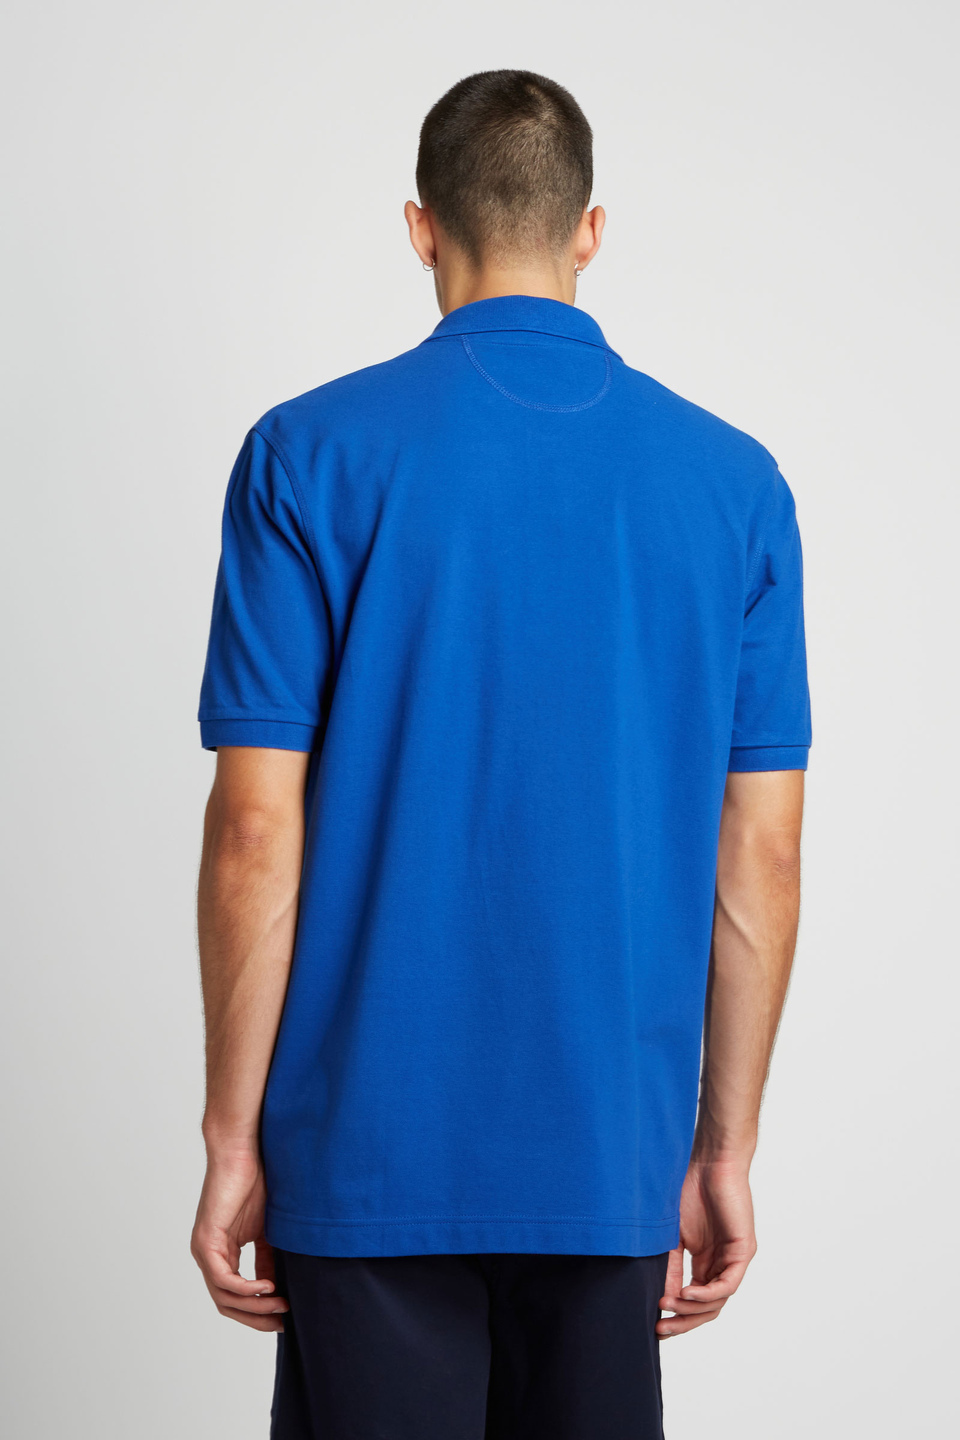 Herren-Poloshirt aus Piqué mit kurzem Arm, oversized Modell | La Martina - Official Online Shop